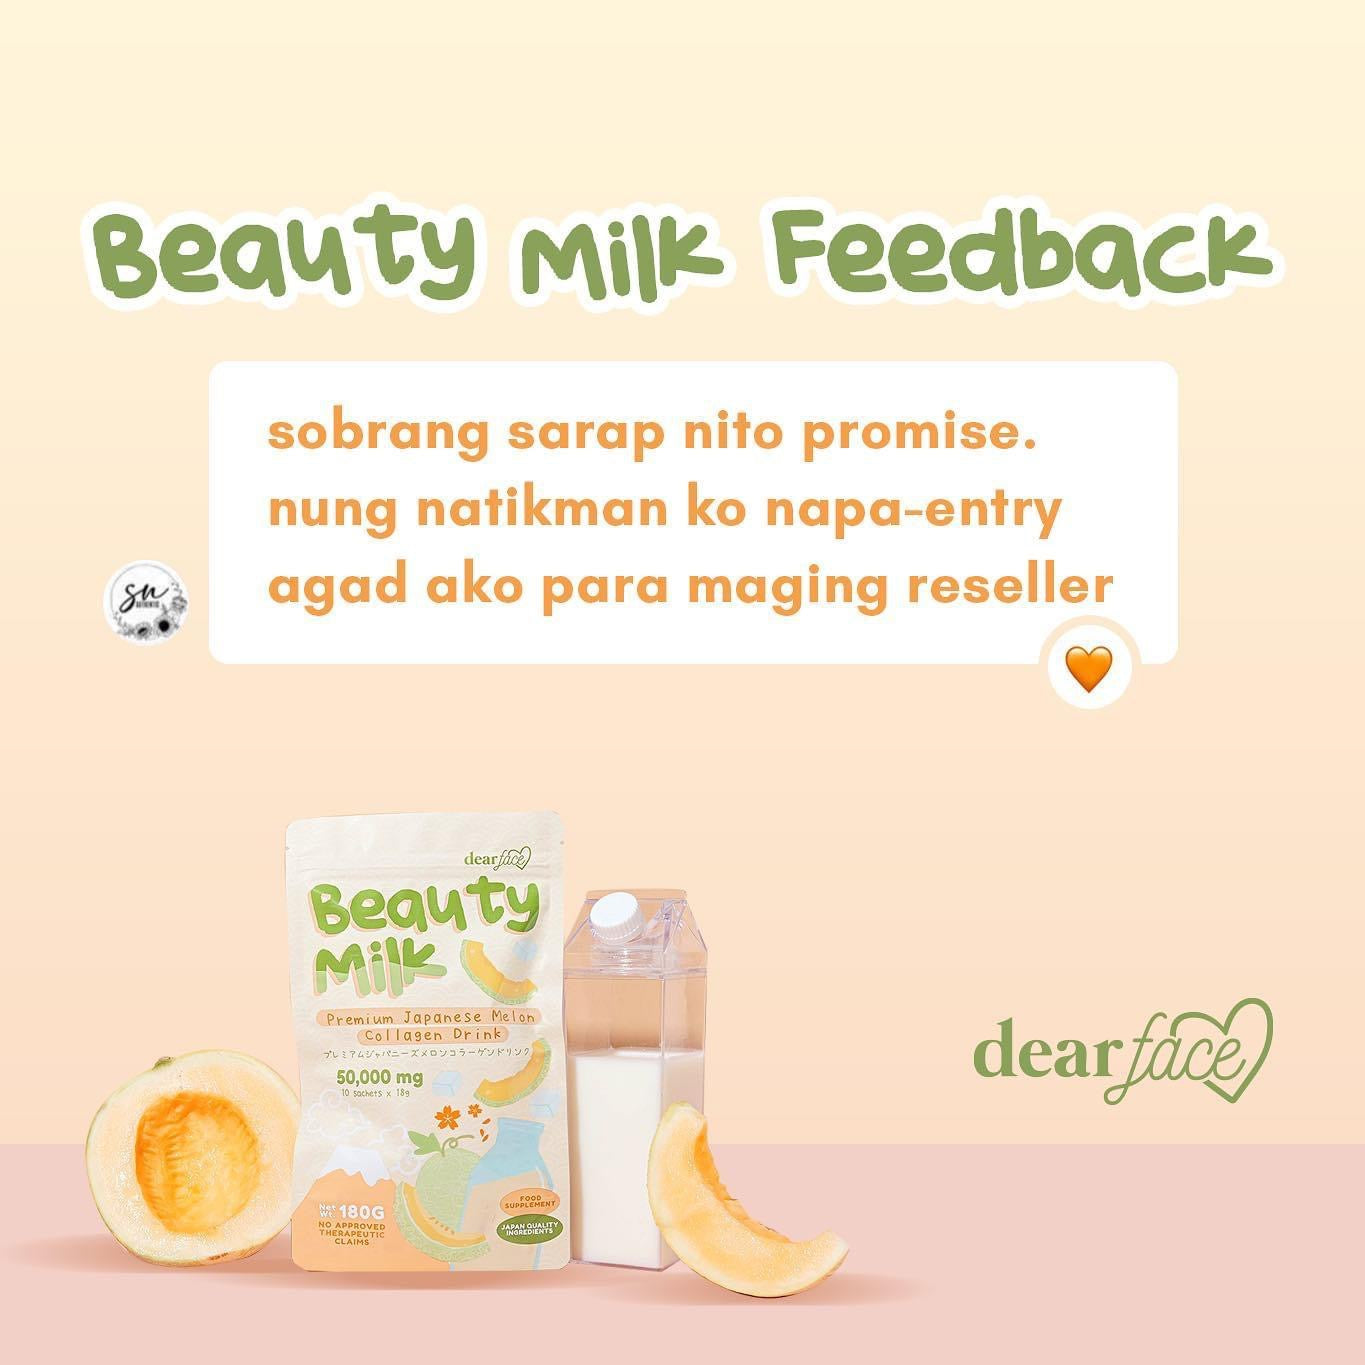 Dear face Beauty Milk